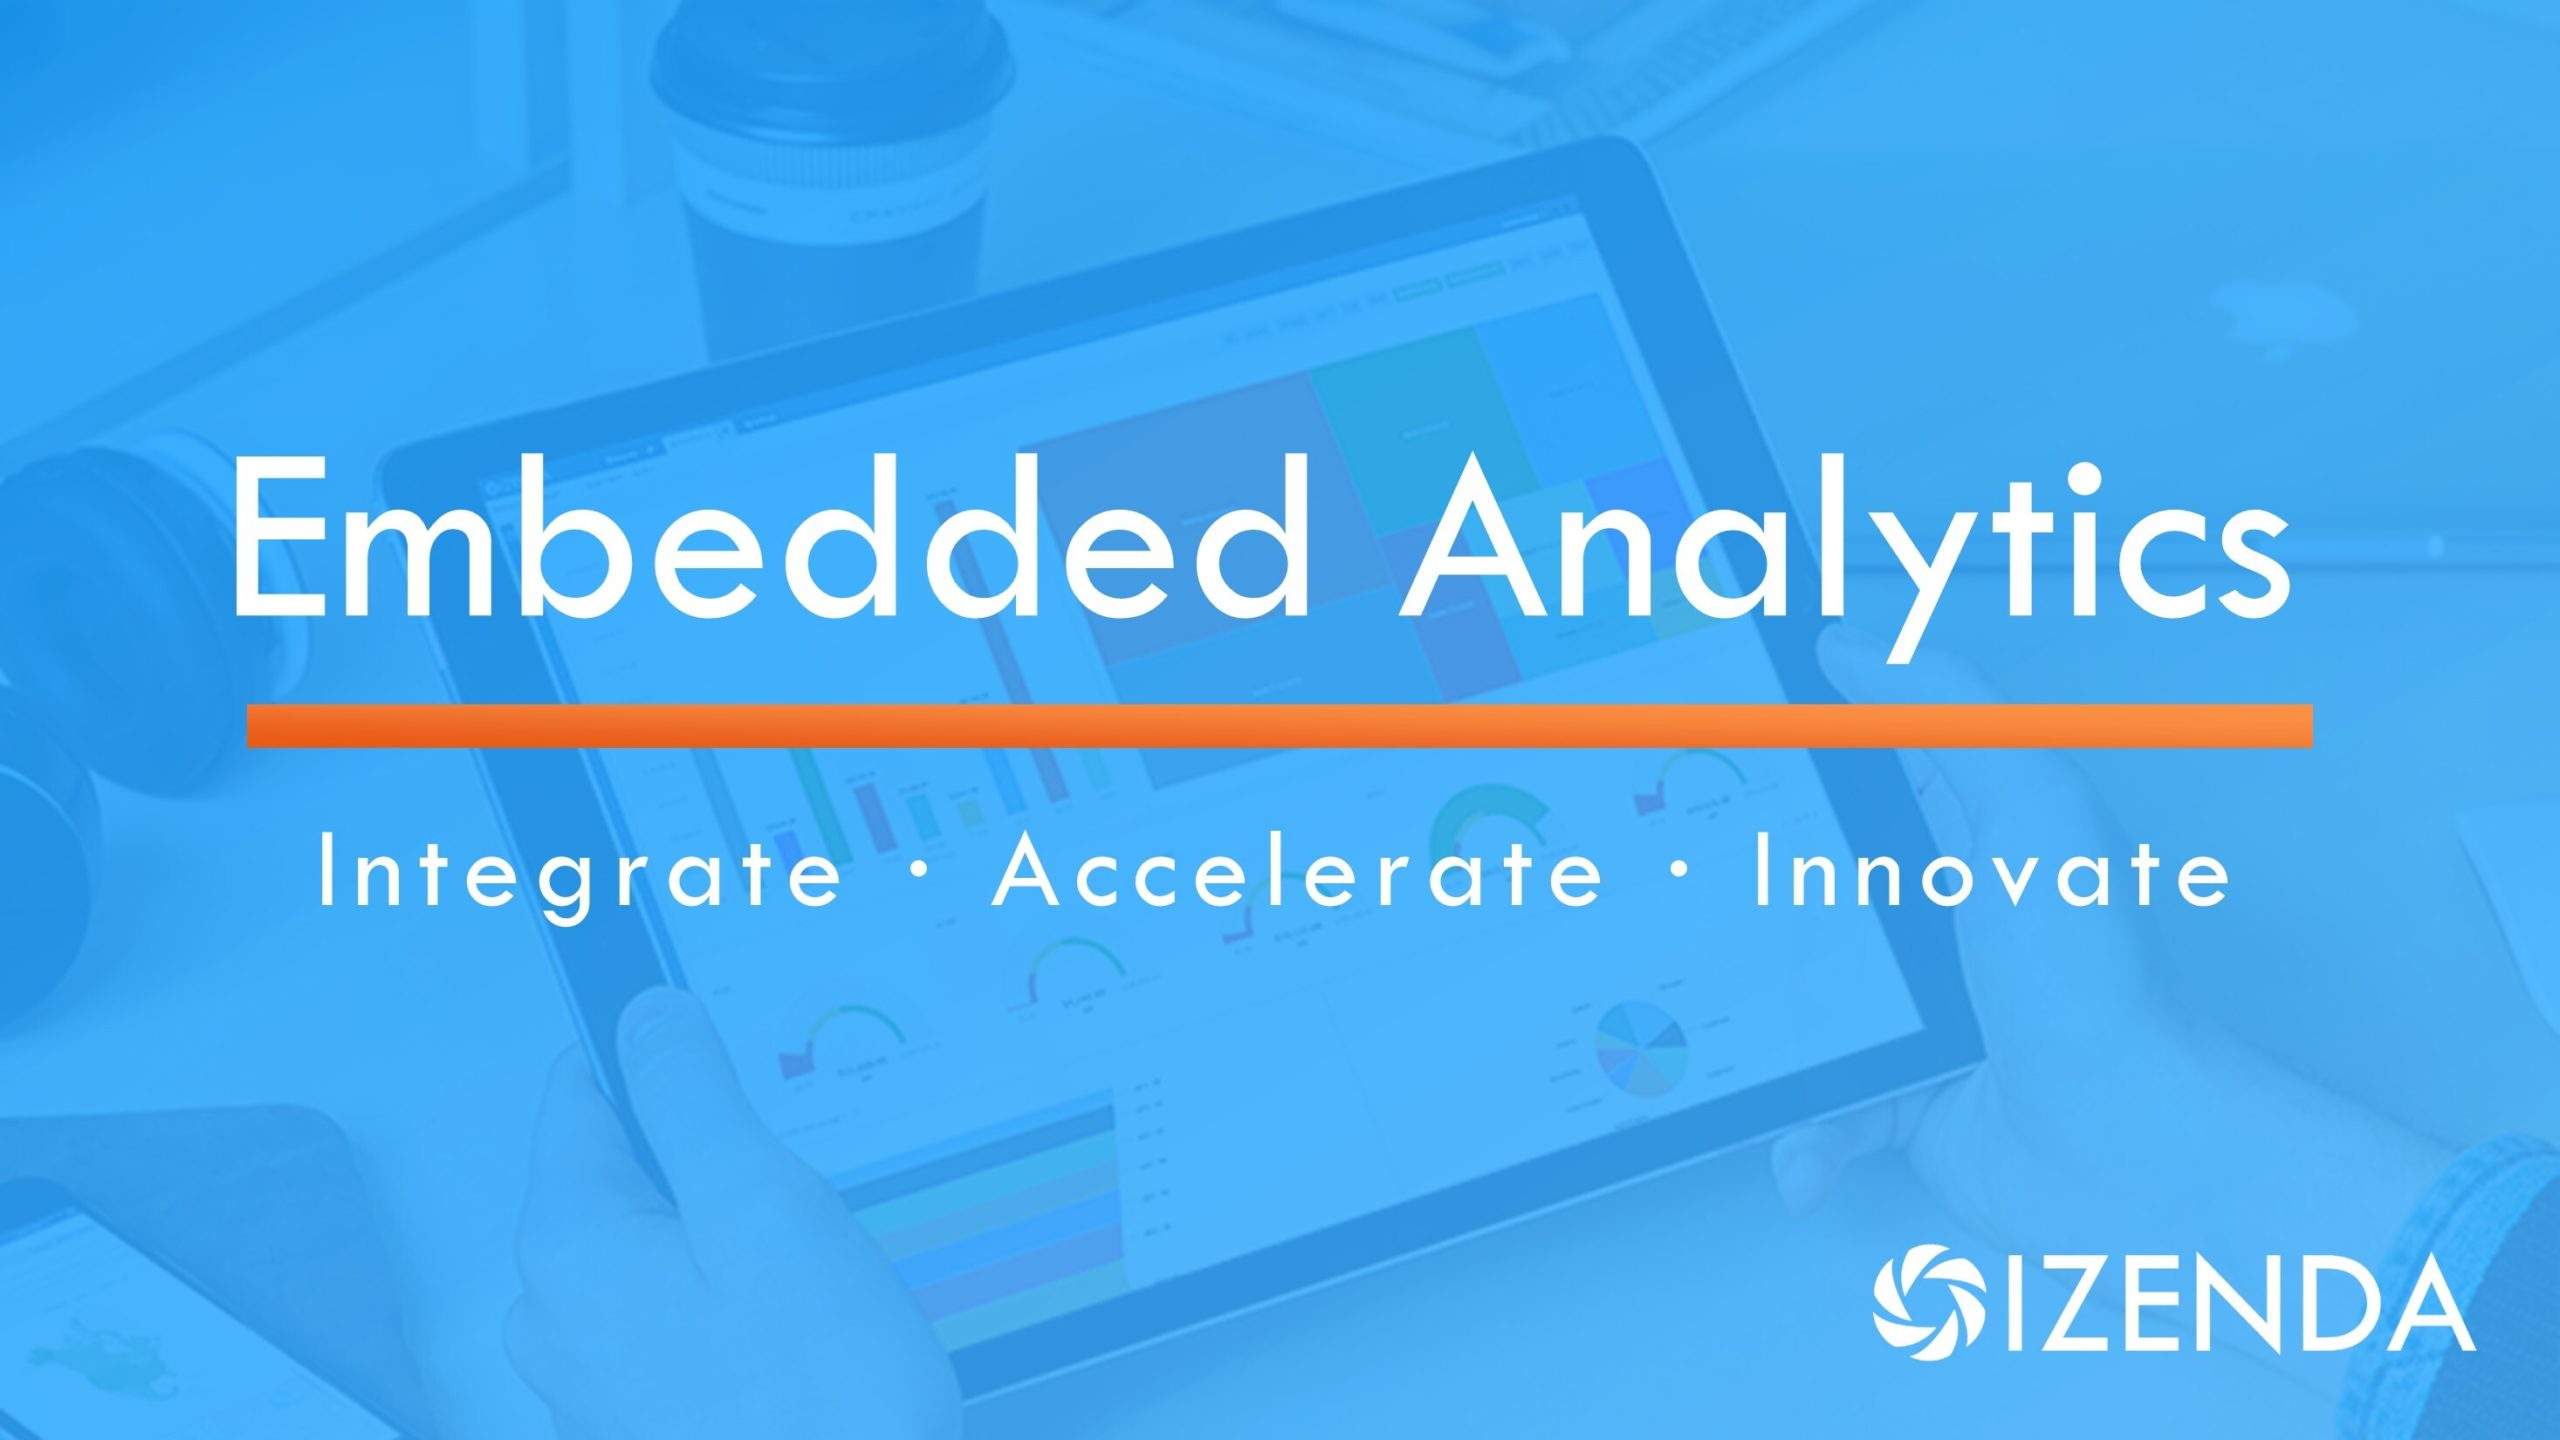 embedded analytics business intelligence from izenda